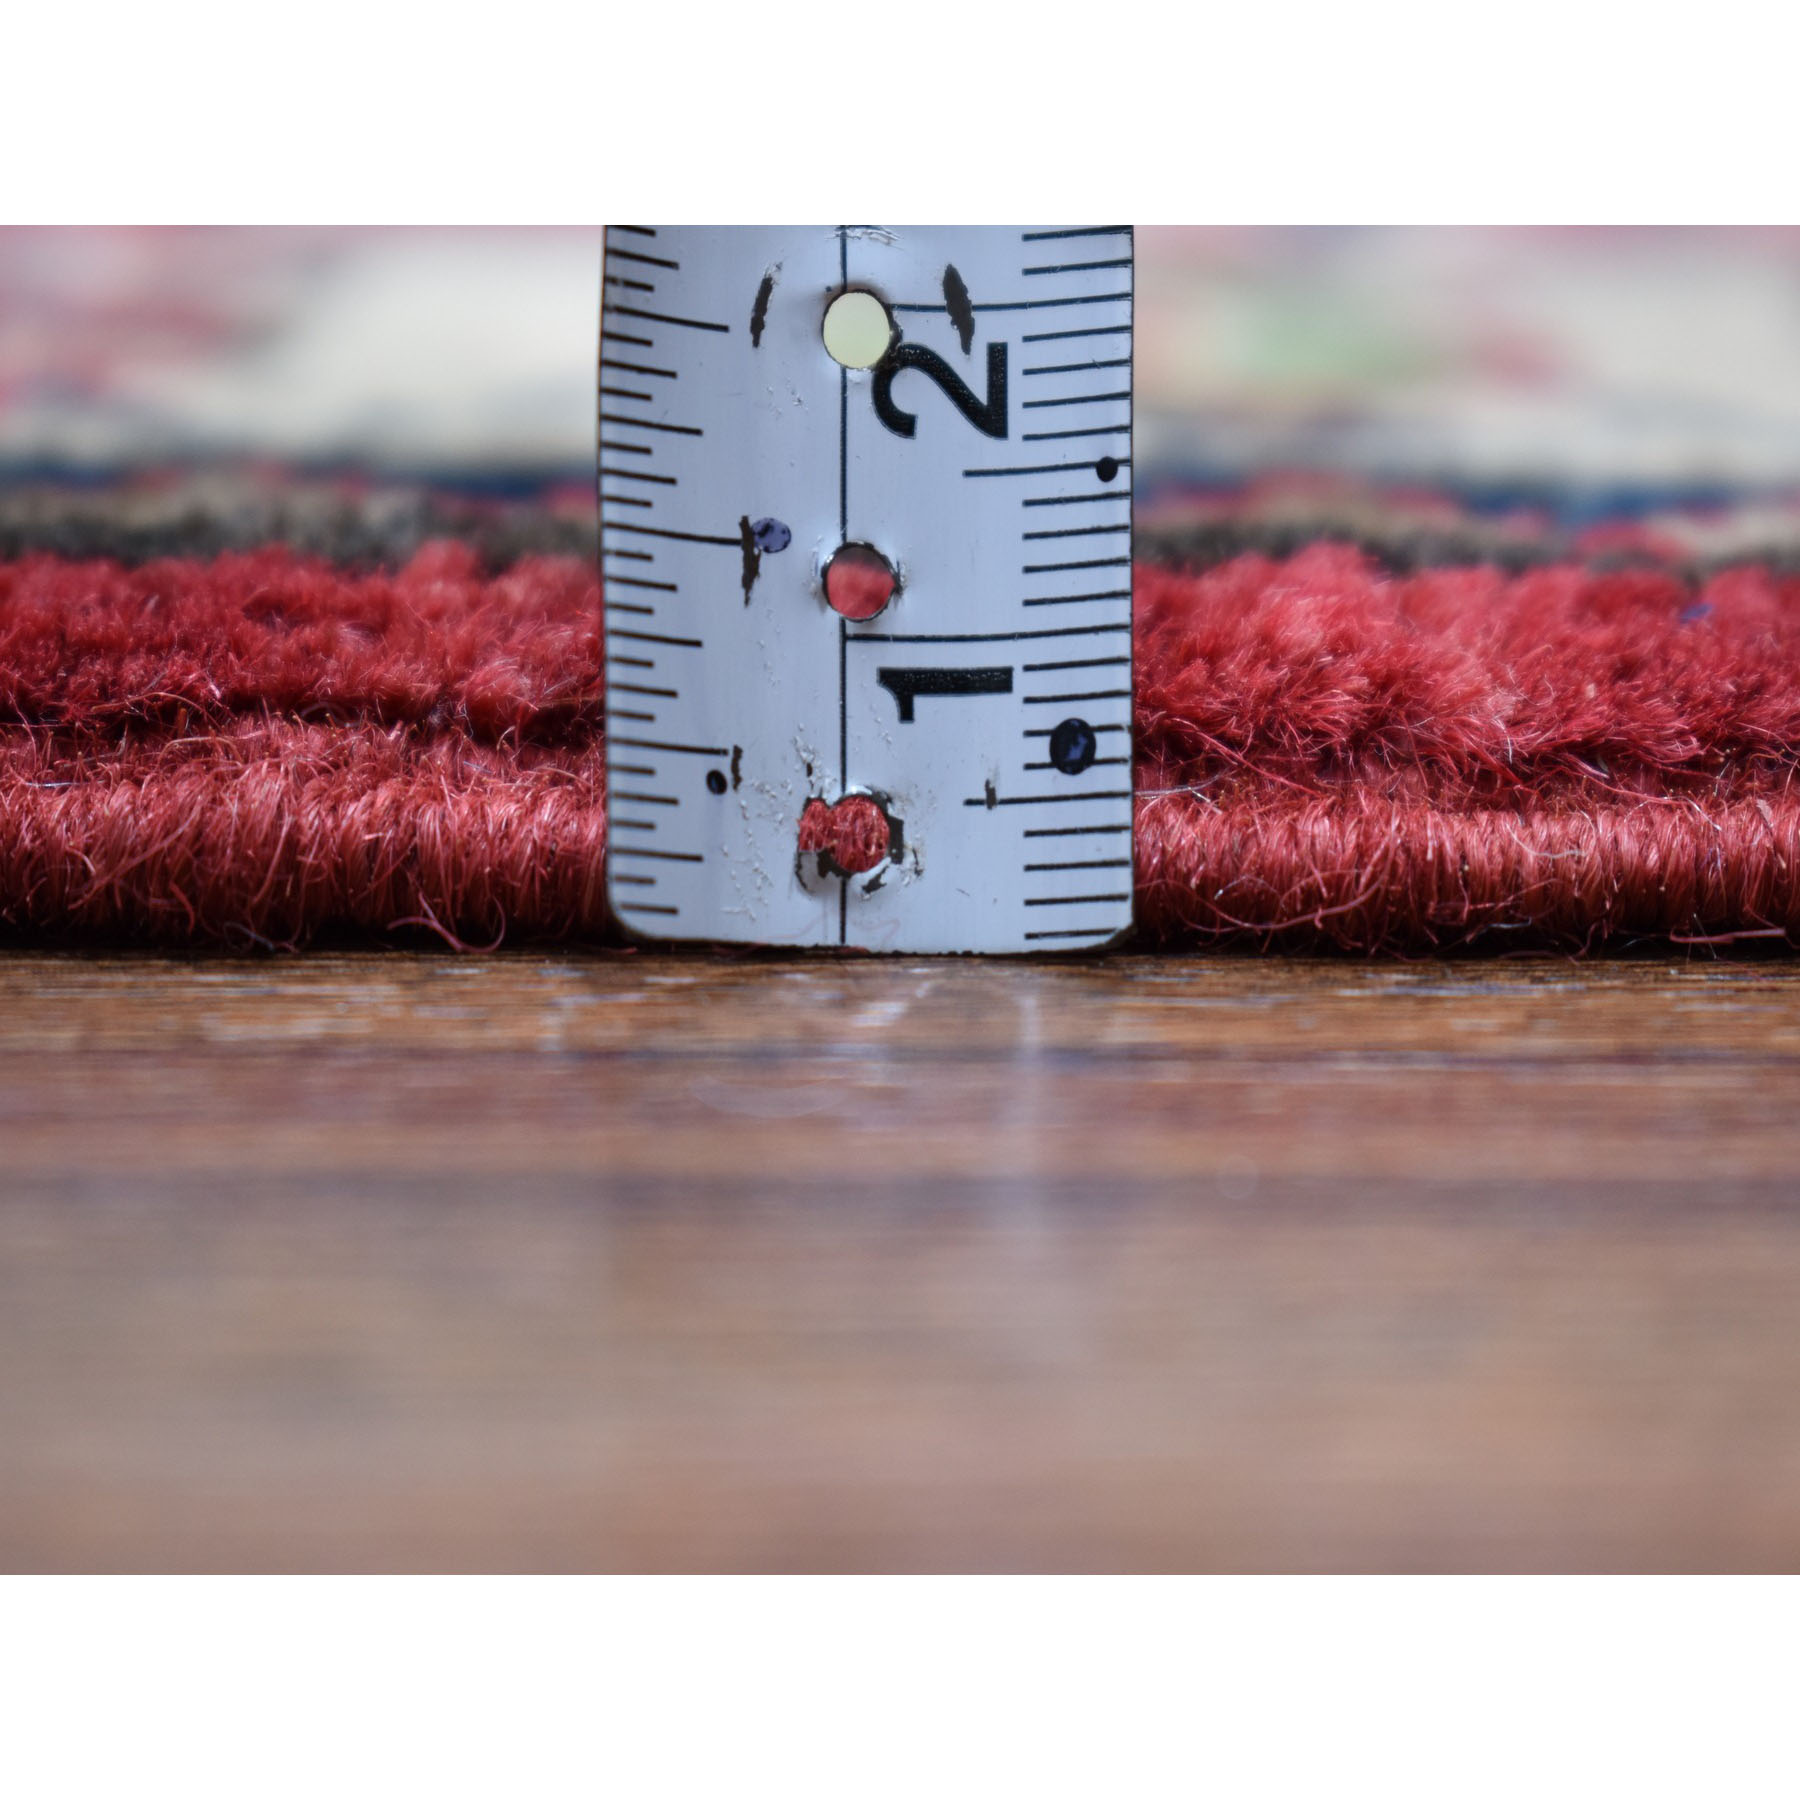 2-x3- Red Geometric Design Kazak Pure Wool Hand-Knotted Oriental Rug 